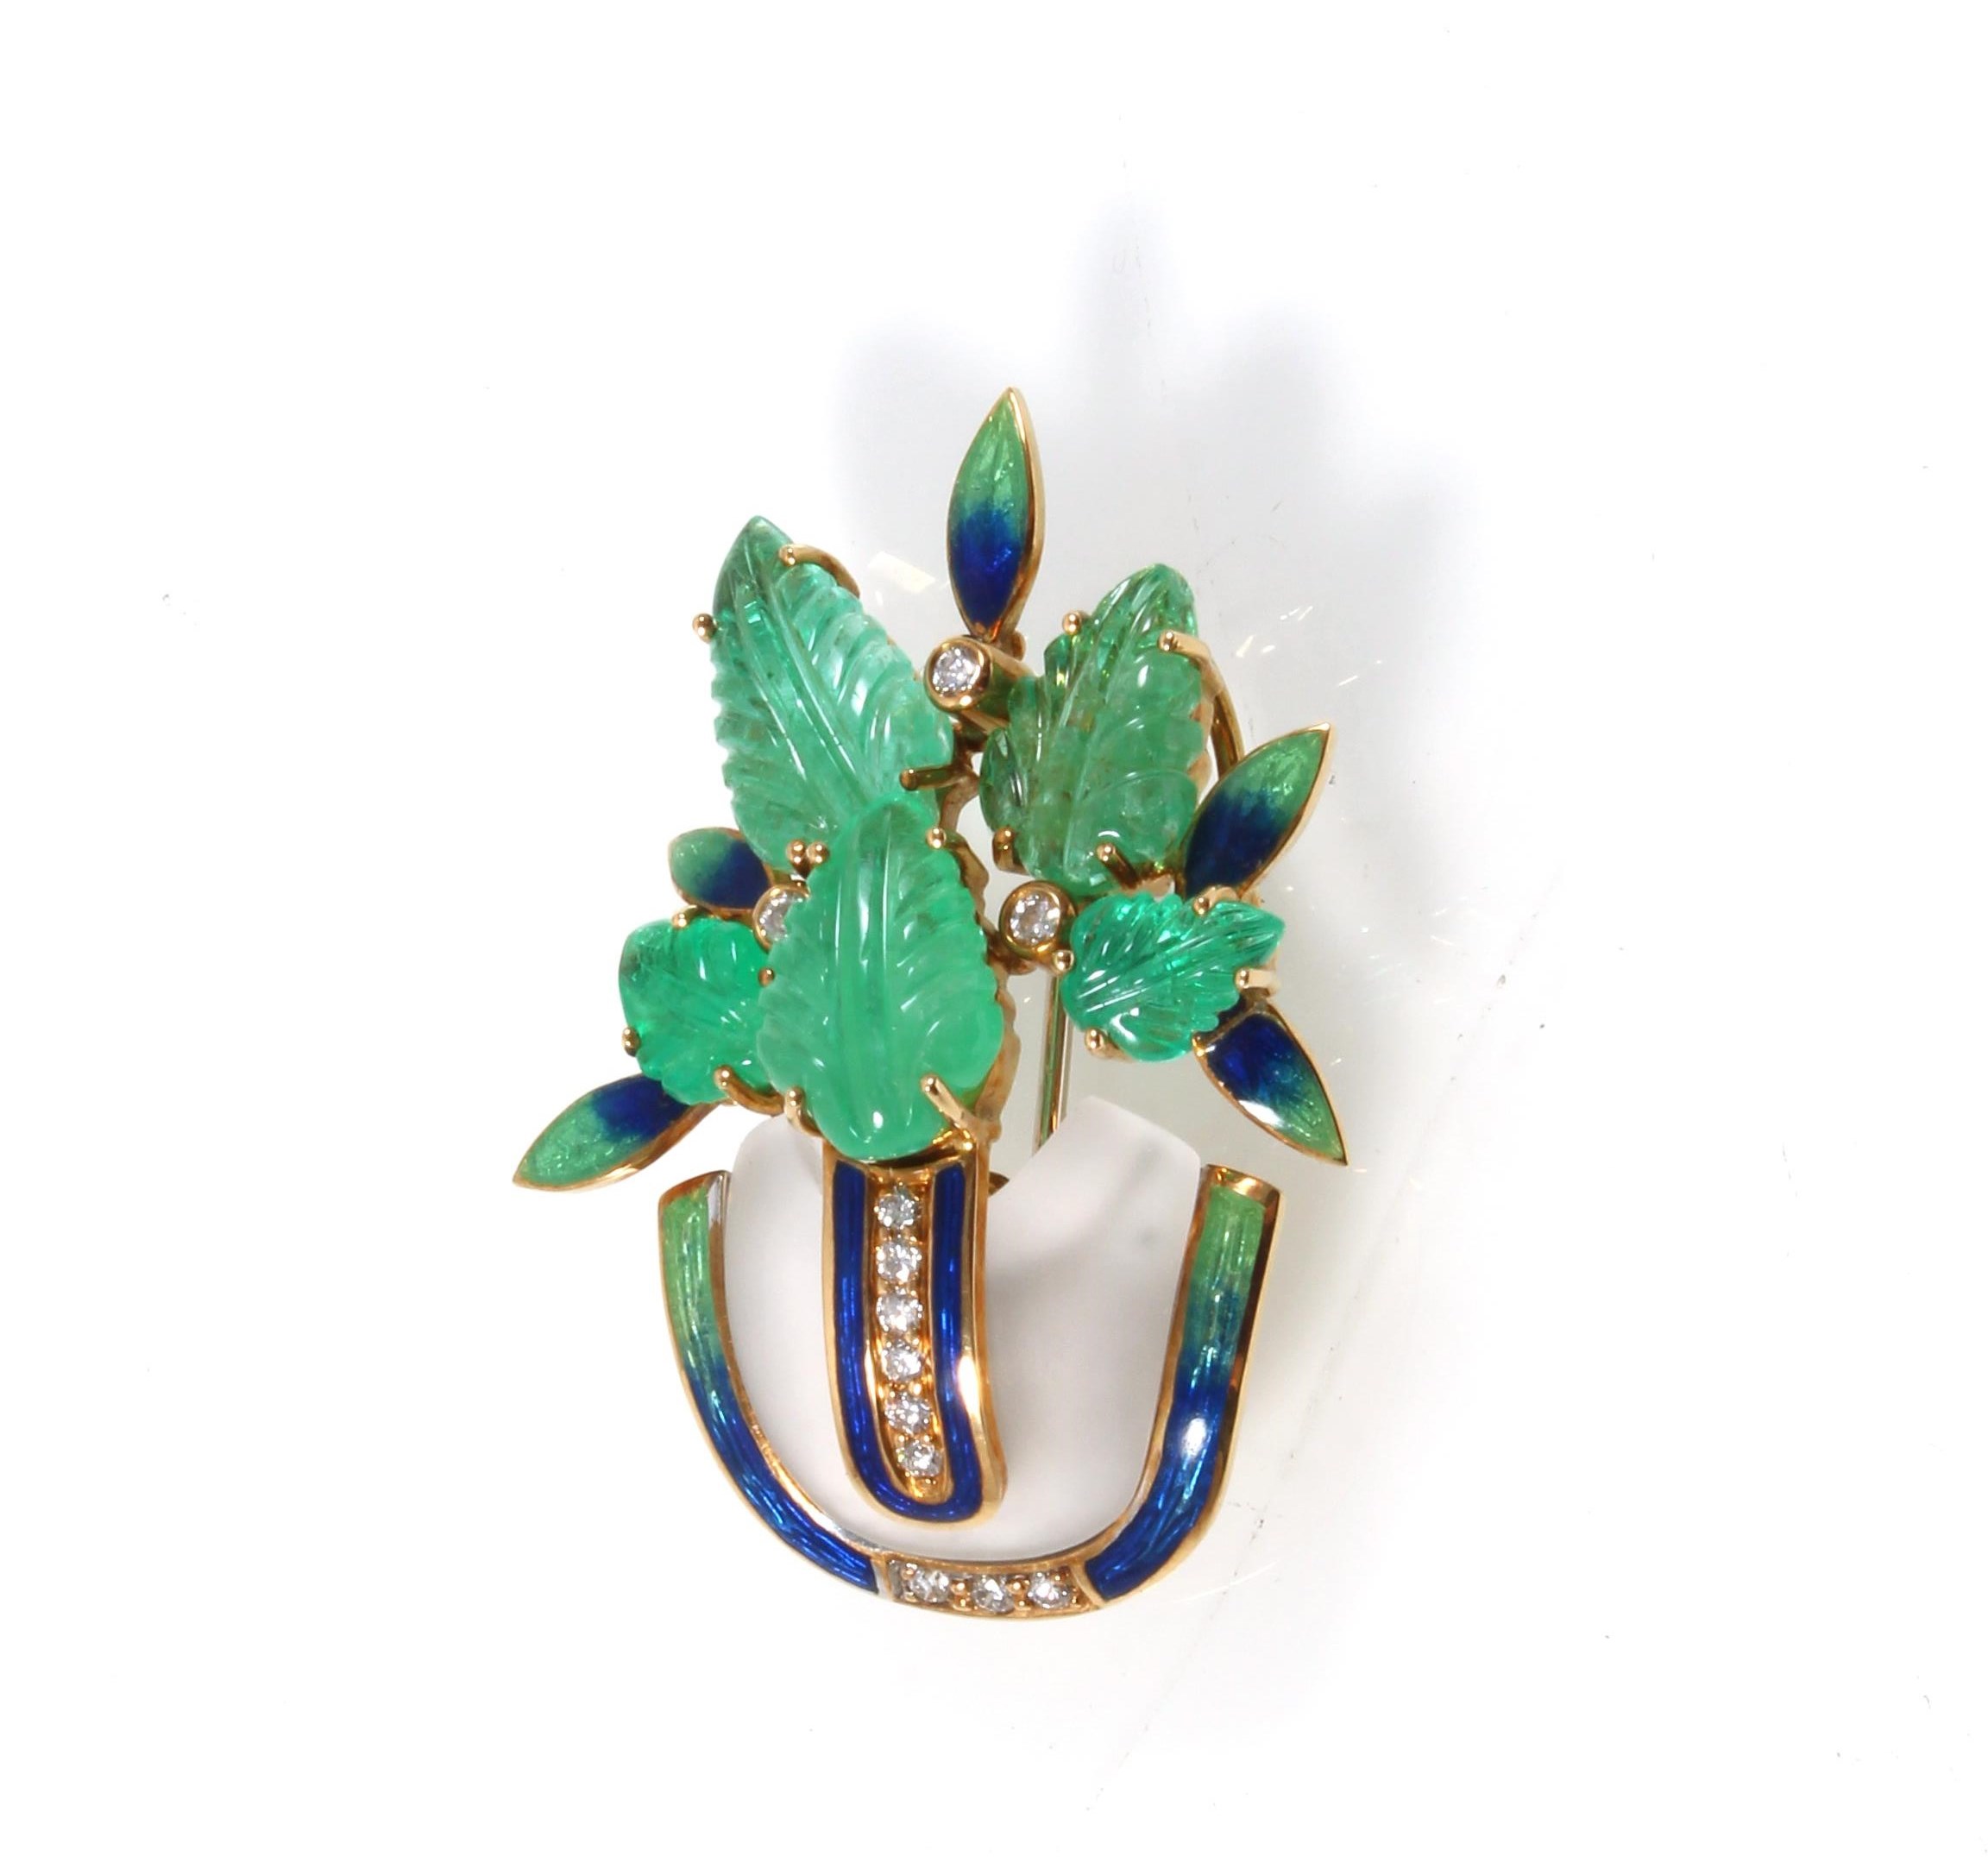 Brilliant emerald brooch